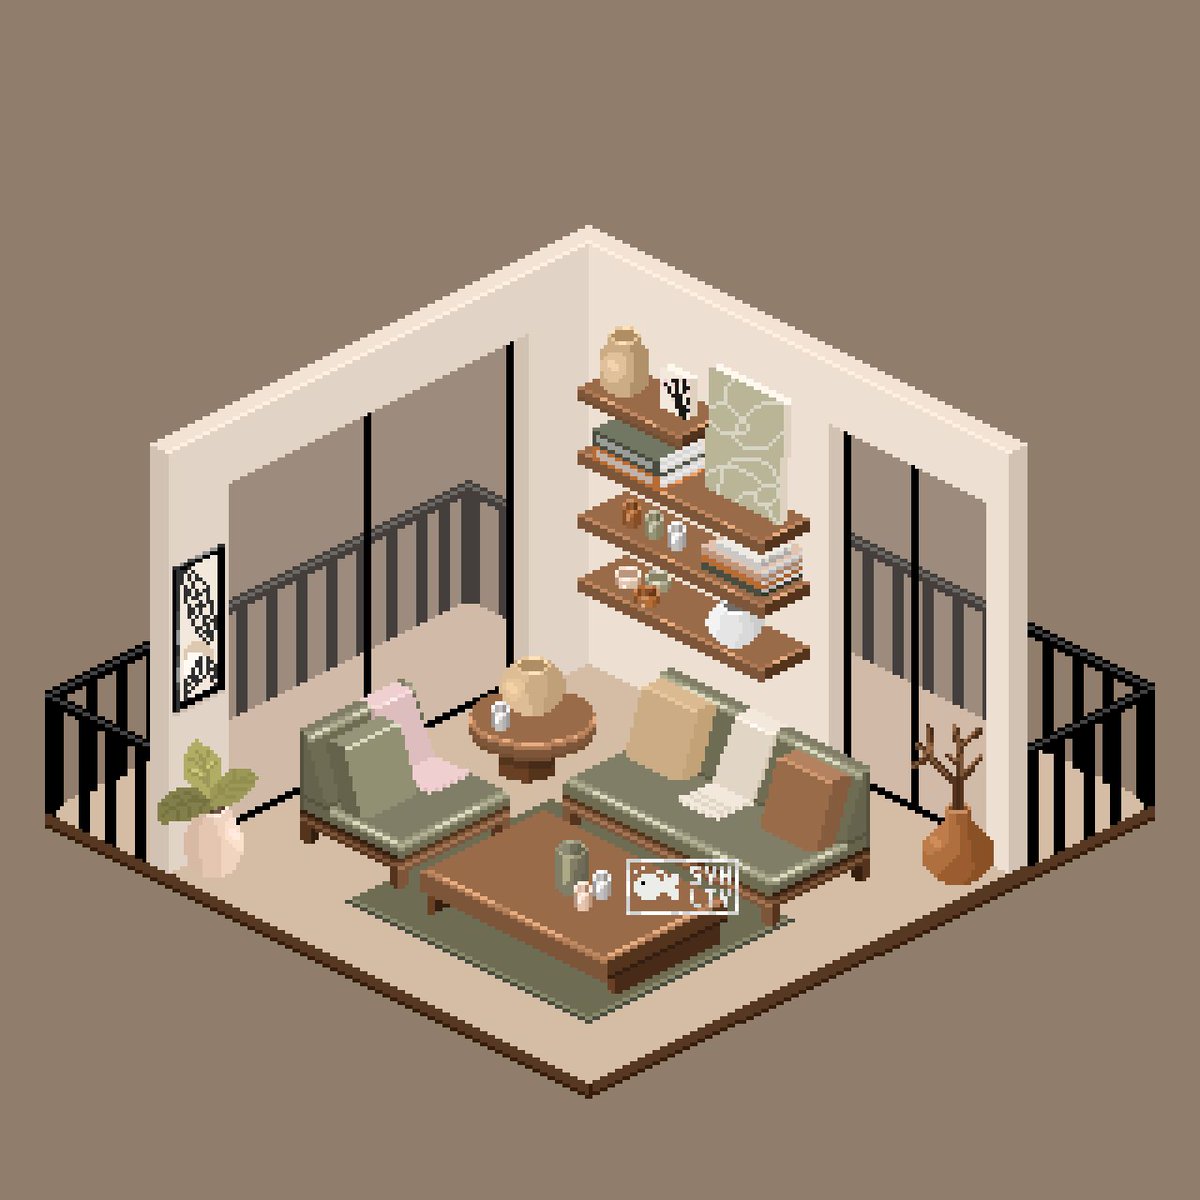 Isometric Living Room. 
#pixelart #ドット絵